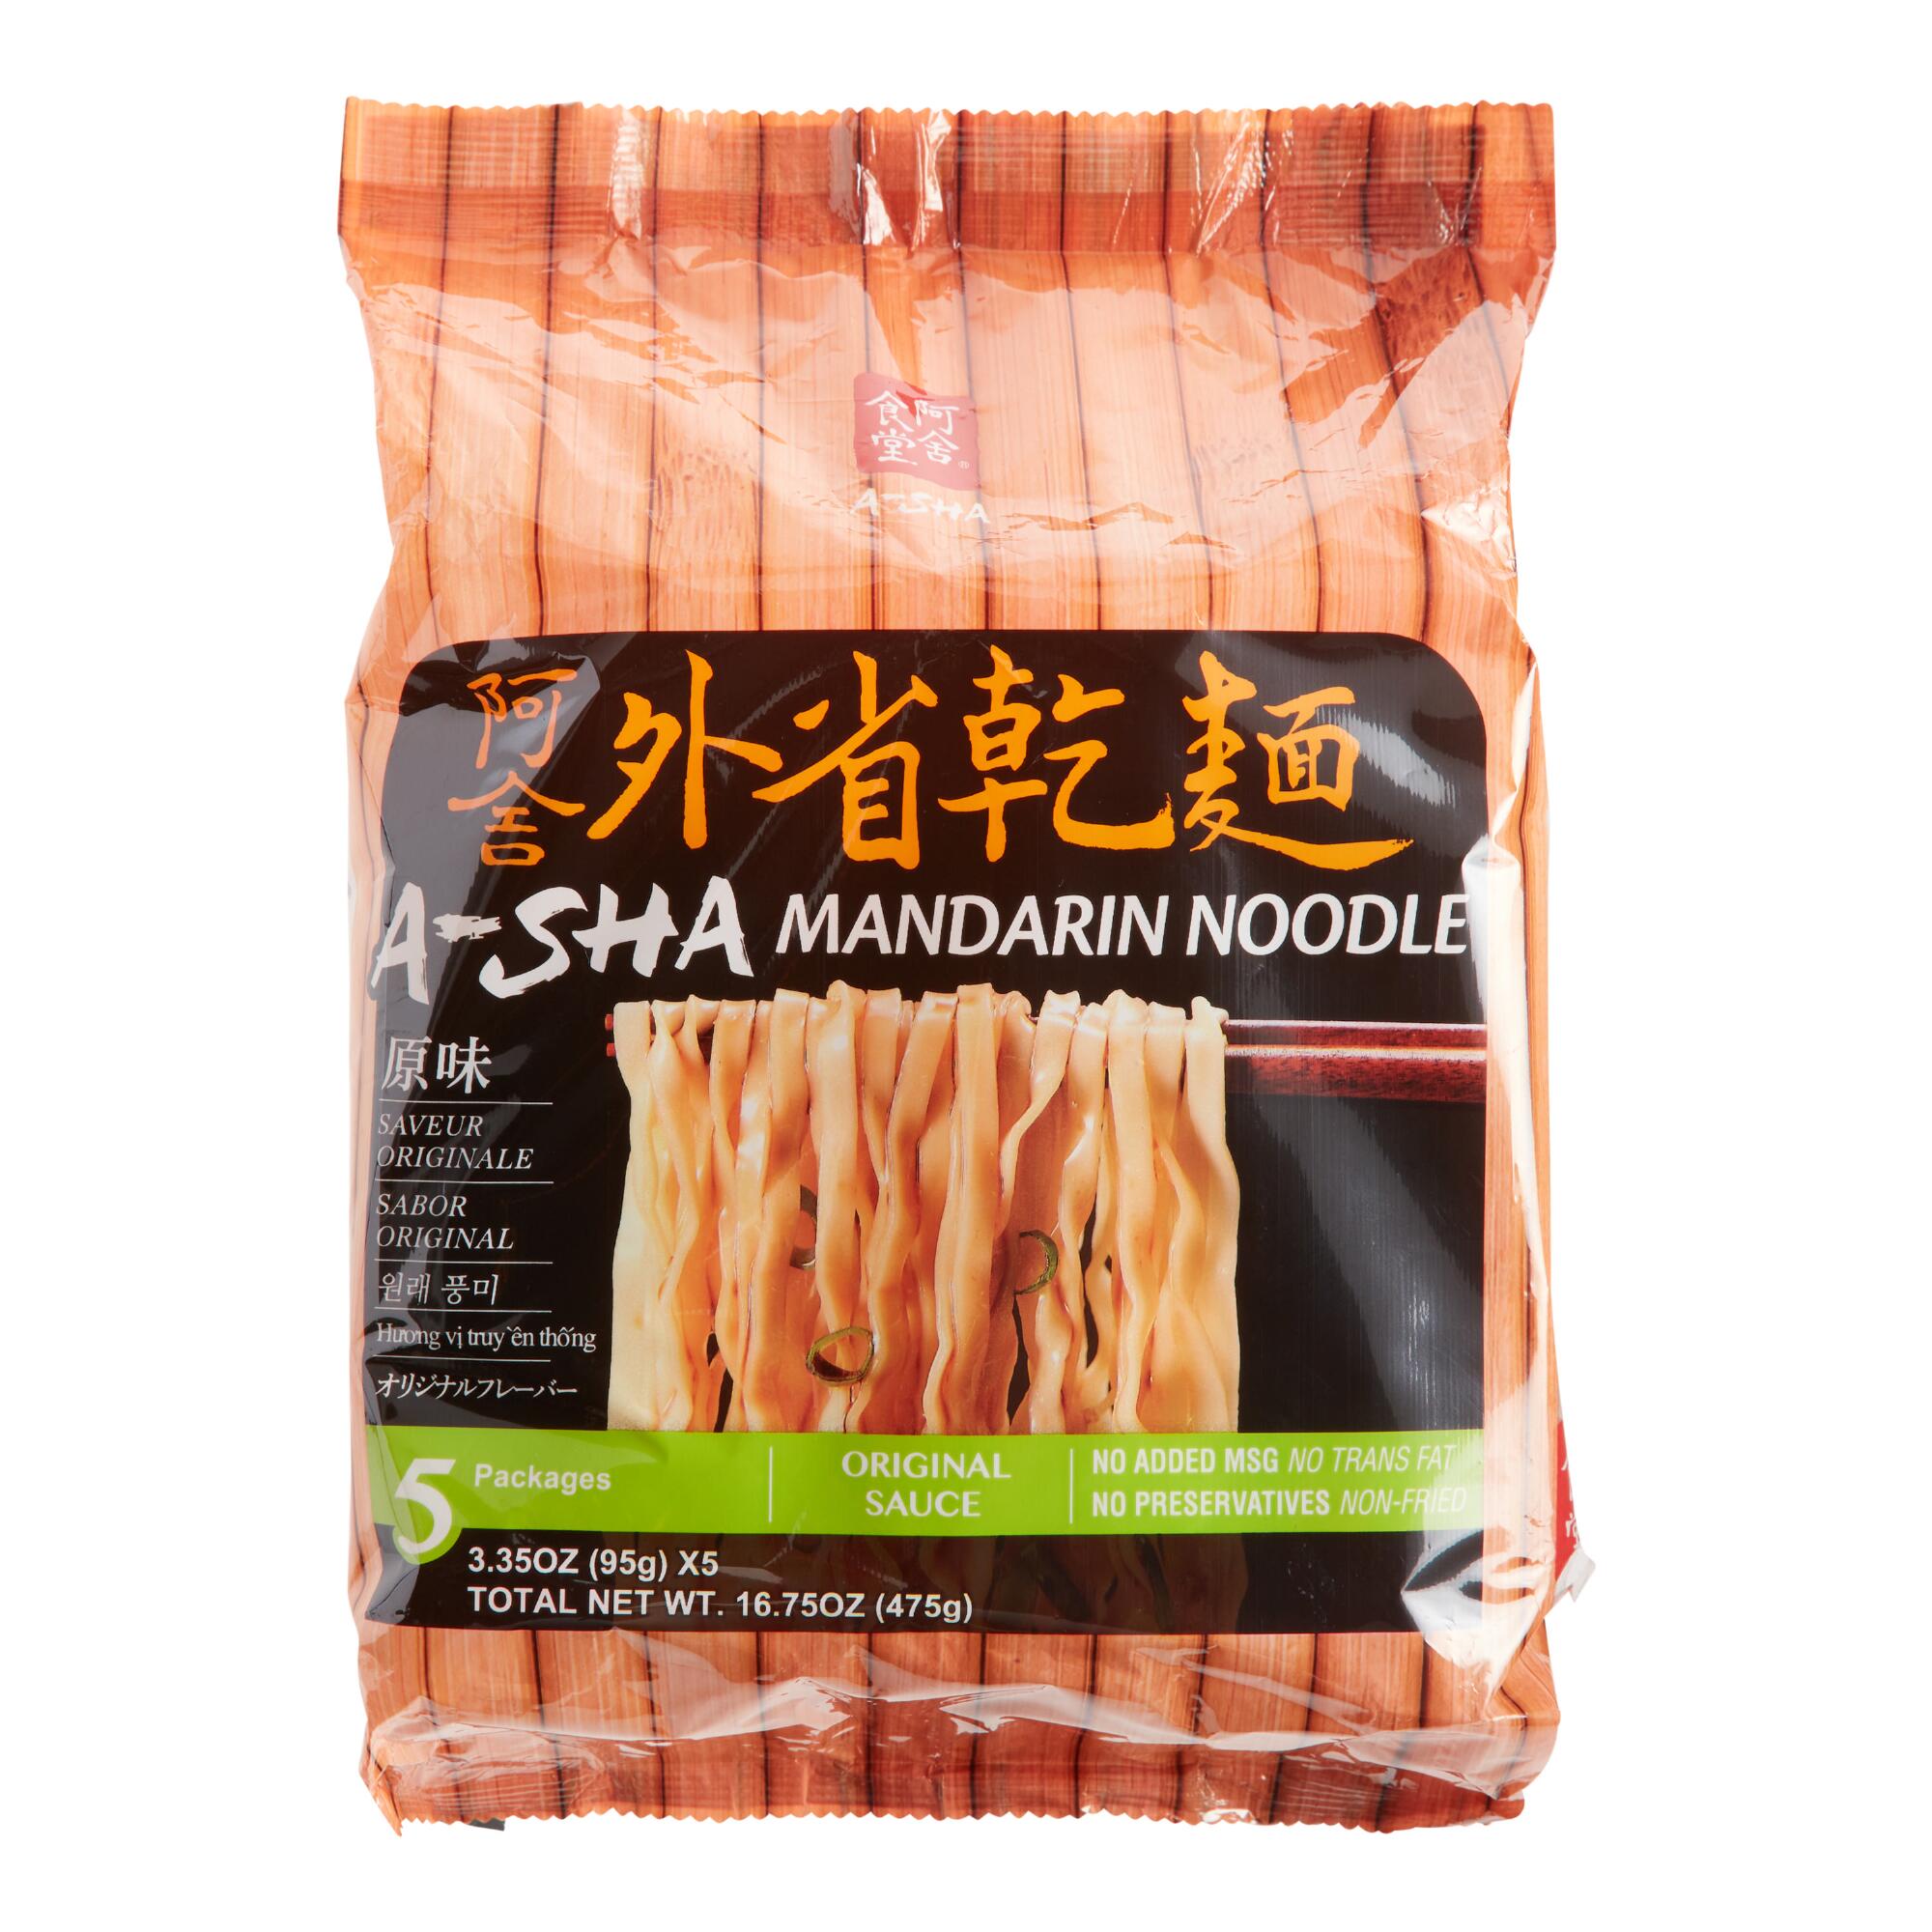 A-Sha Original Mandarin Noodles by World Market